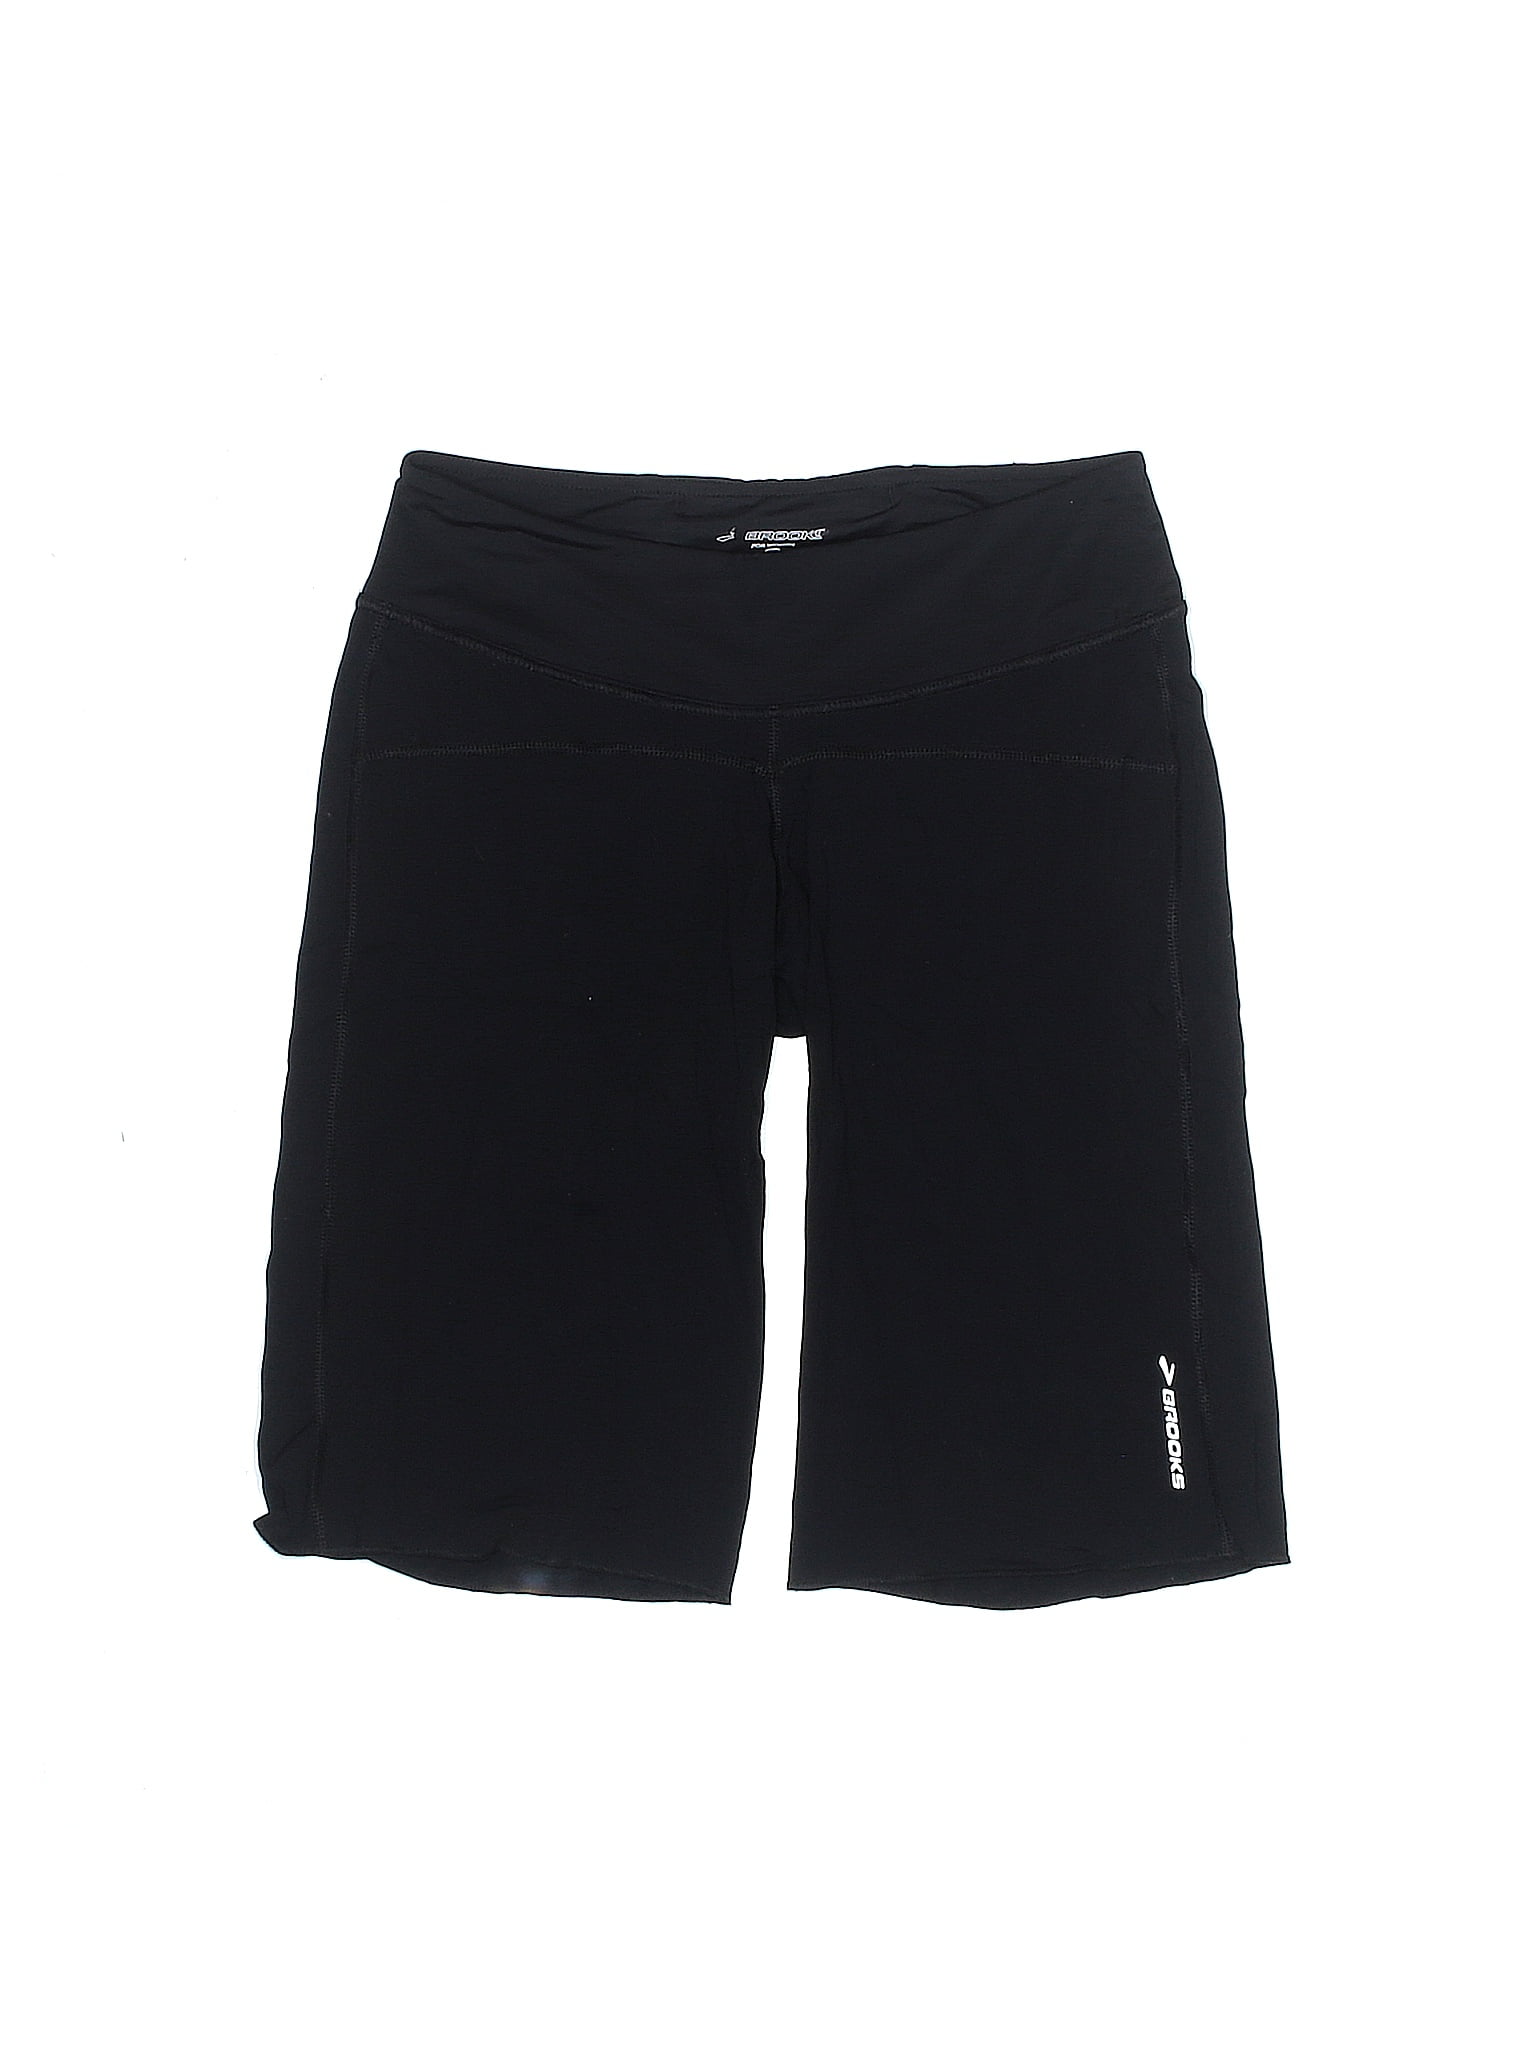 Brooks Solid Black Shorts Size S - 70% off | thredUP